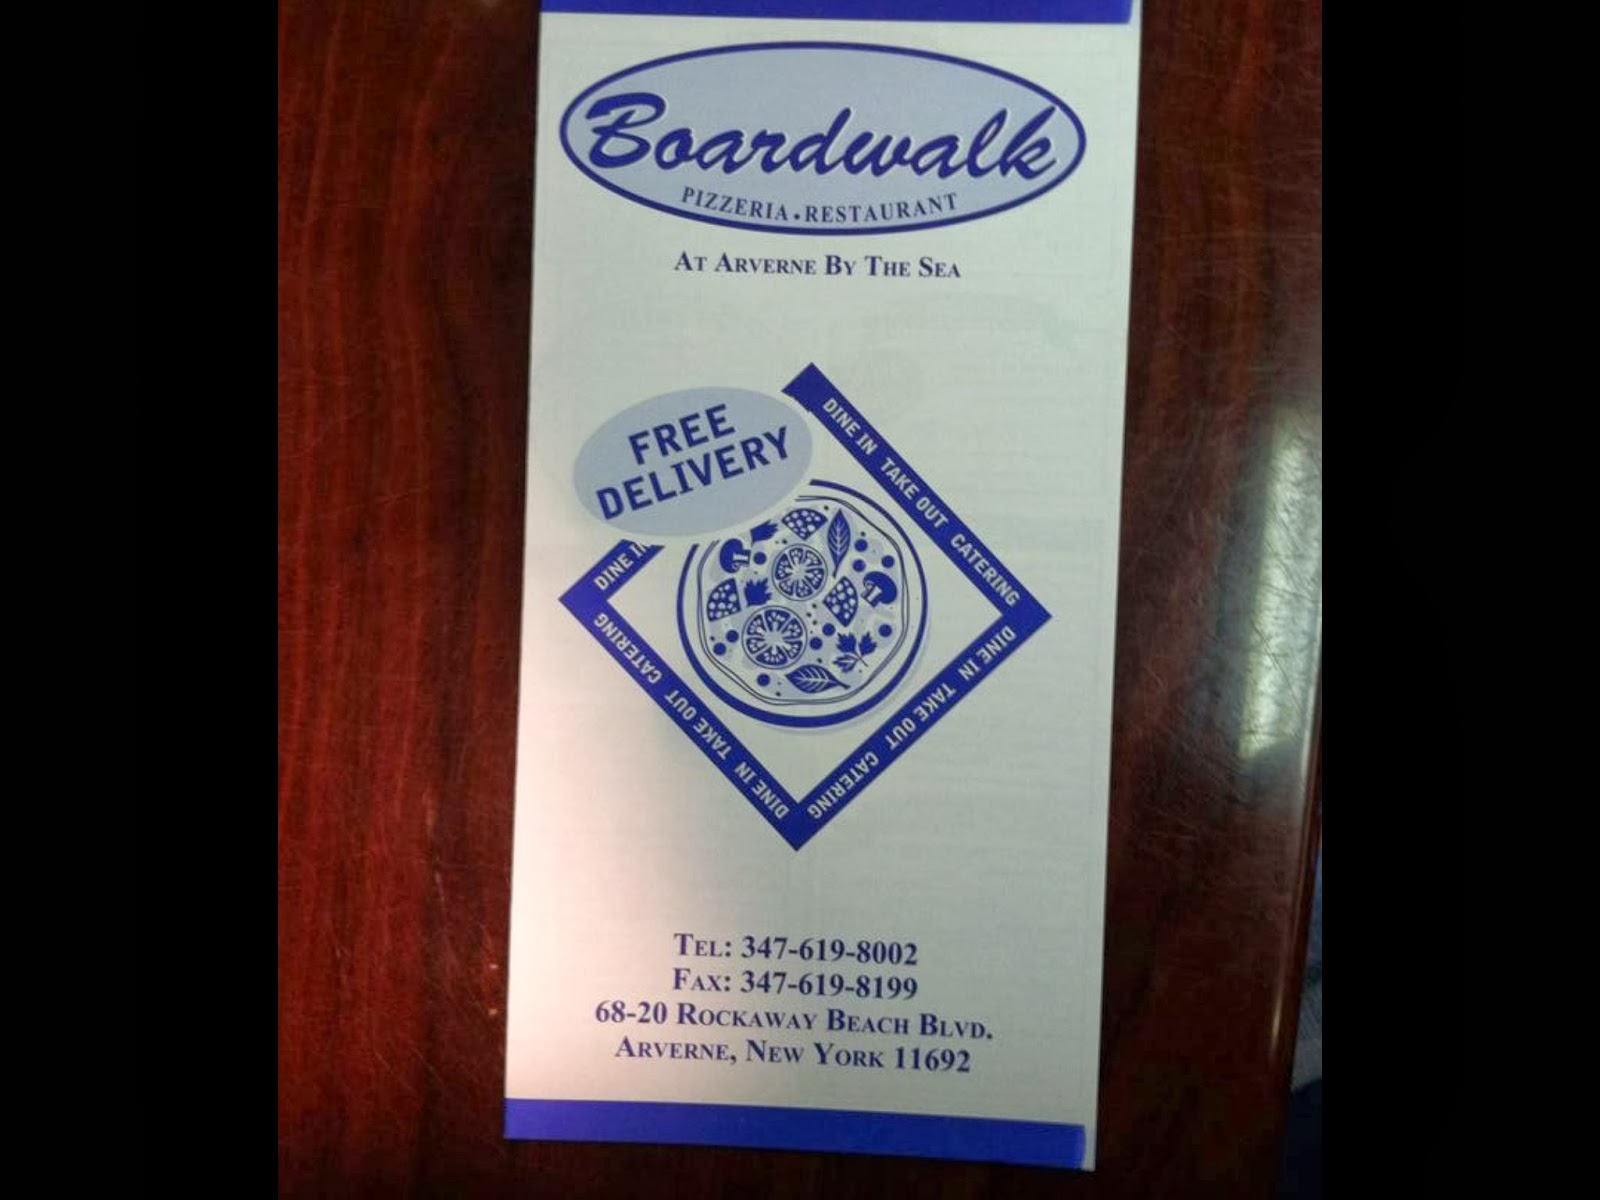 Photo of Boardwalk Pizzeria & Restaurant in Arverne City, New York, United States - 4 Picture of Restaurant, Food, Point of interest, Establishment